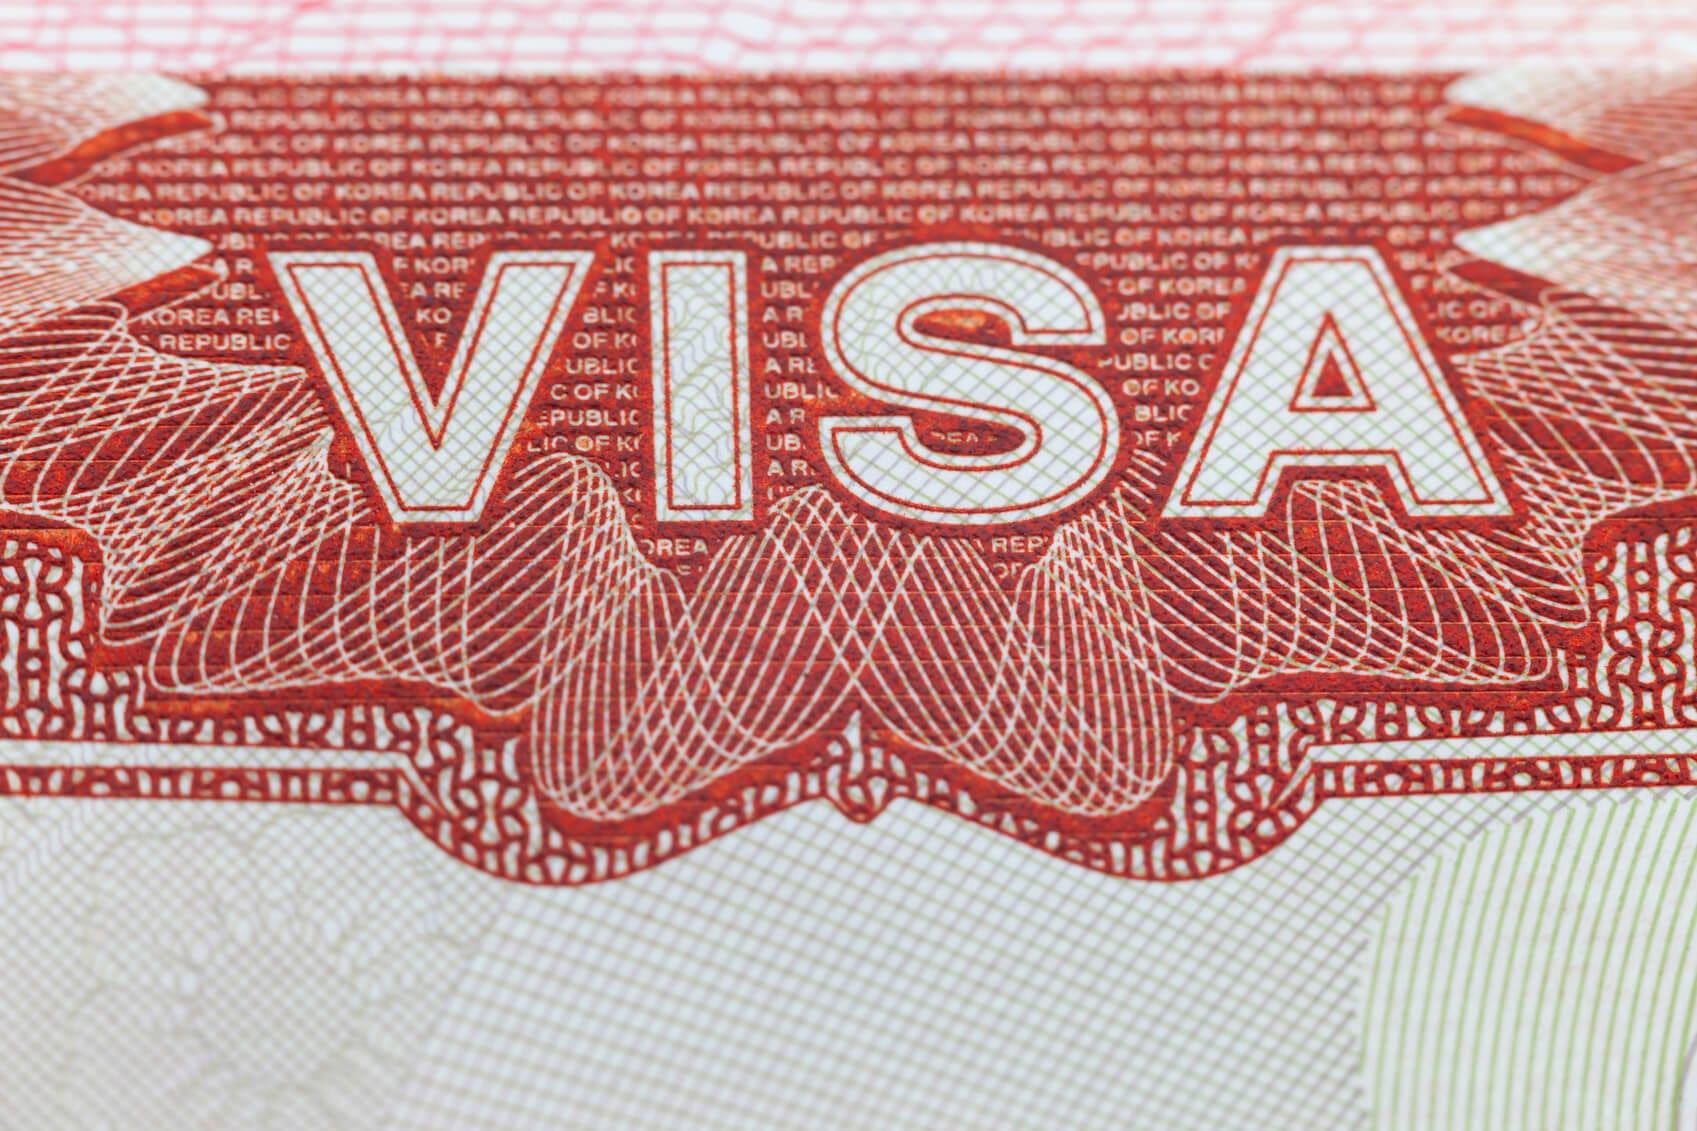 visa card international travel insurance